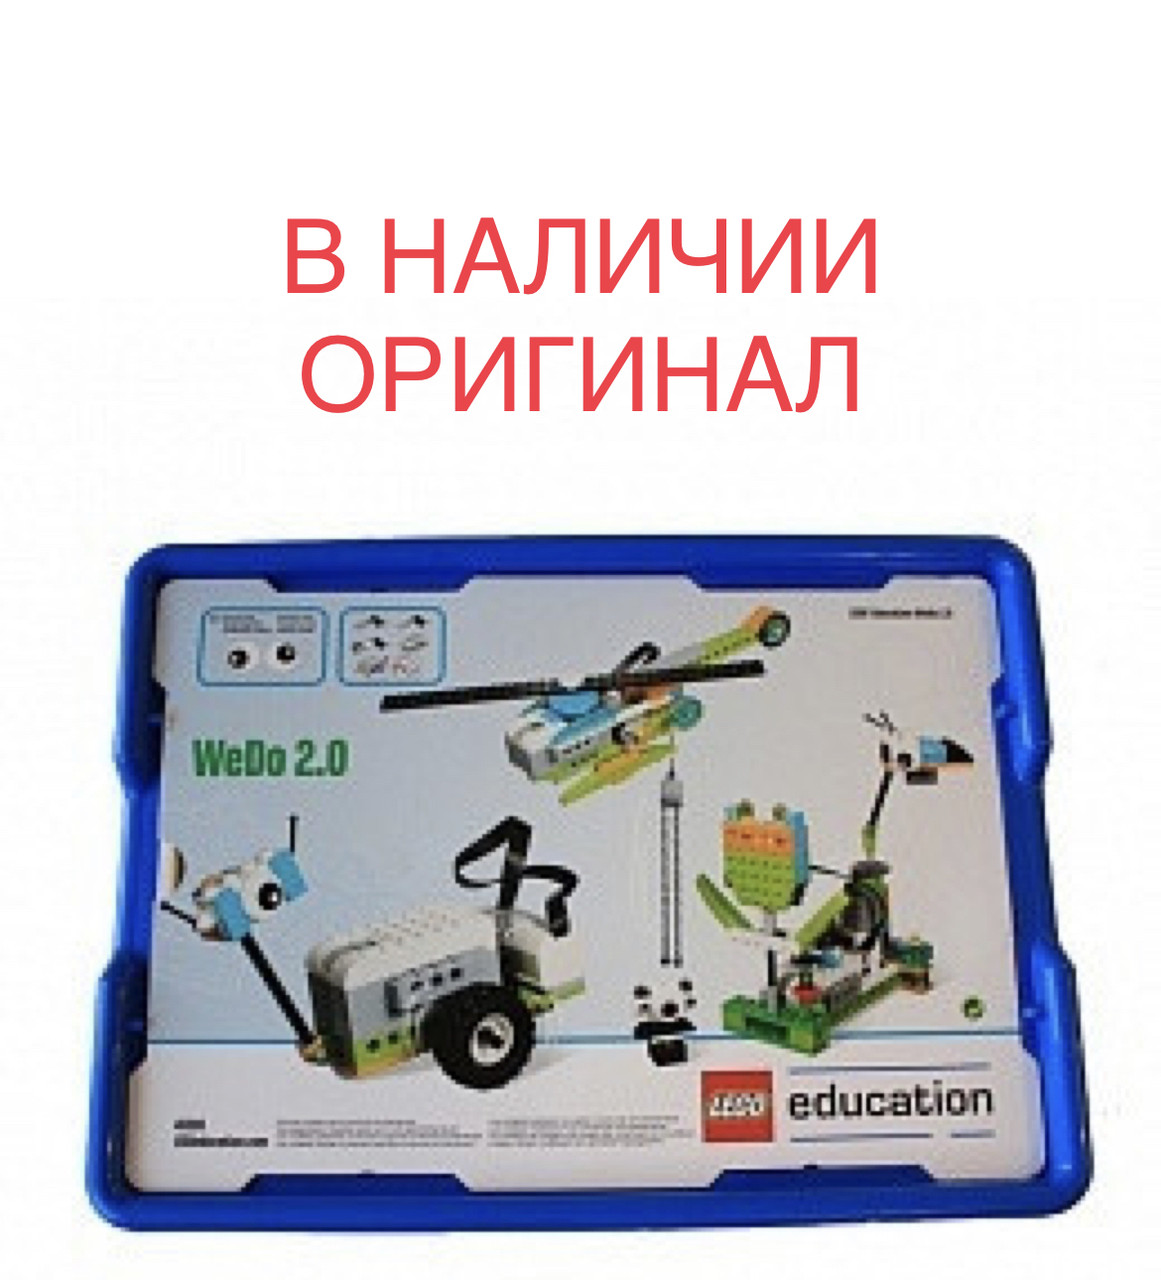 Lego Education WeDo 2.0 45300 базовый, фото 1